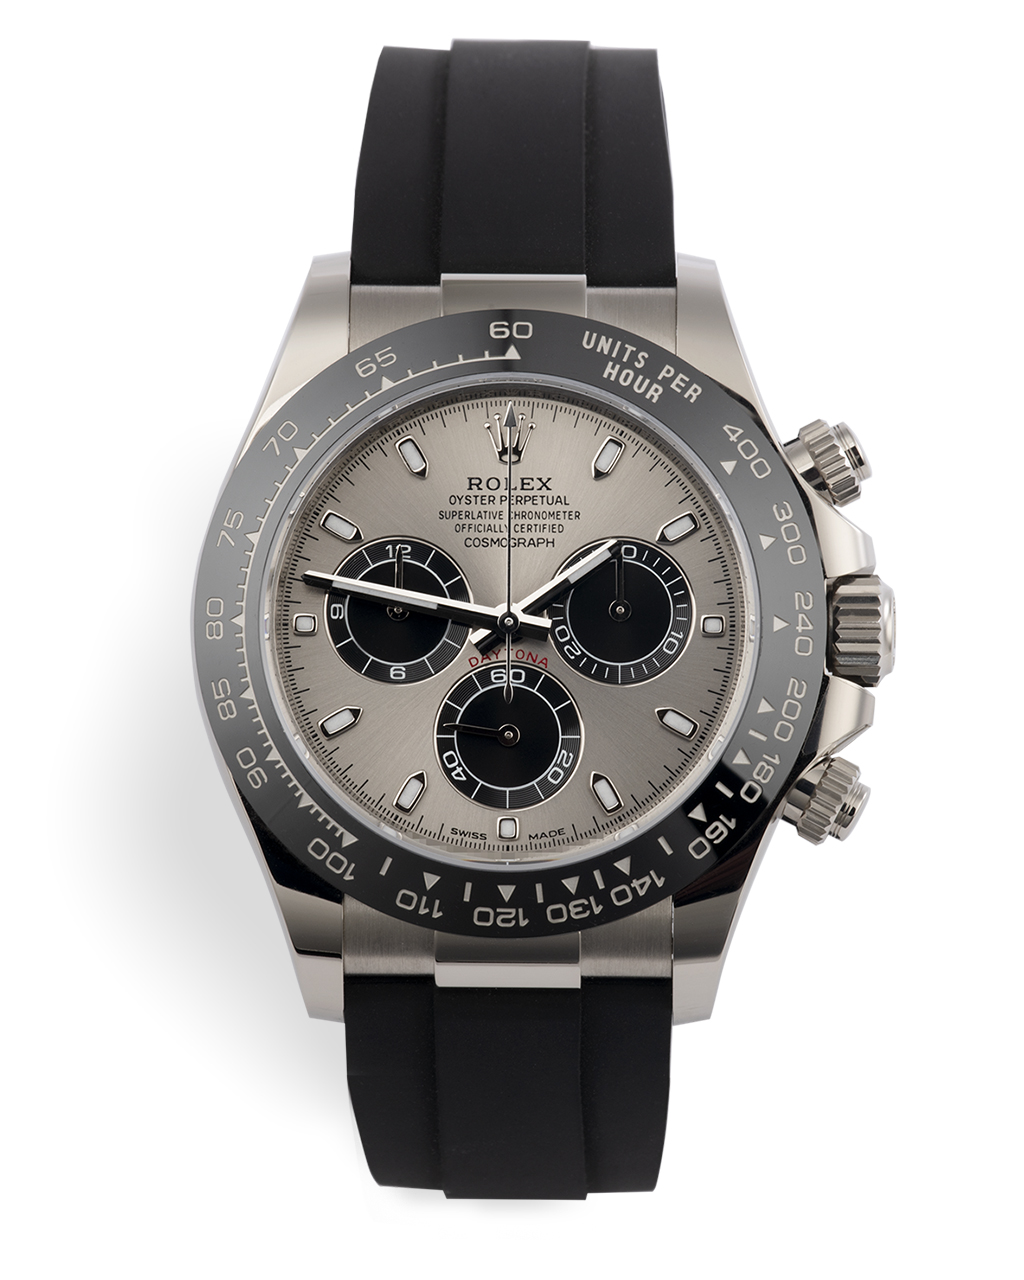 Rolex Cosmograph Daytona Watches | ref 116519LN | Box & Certificate ...